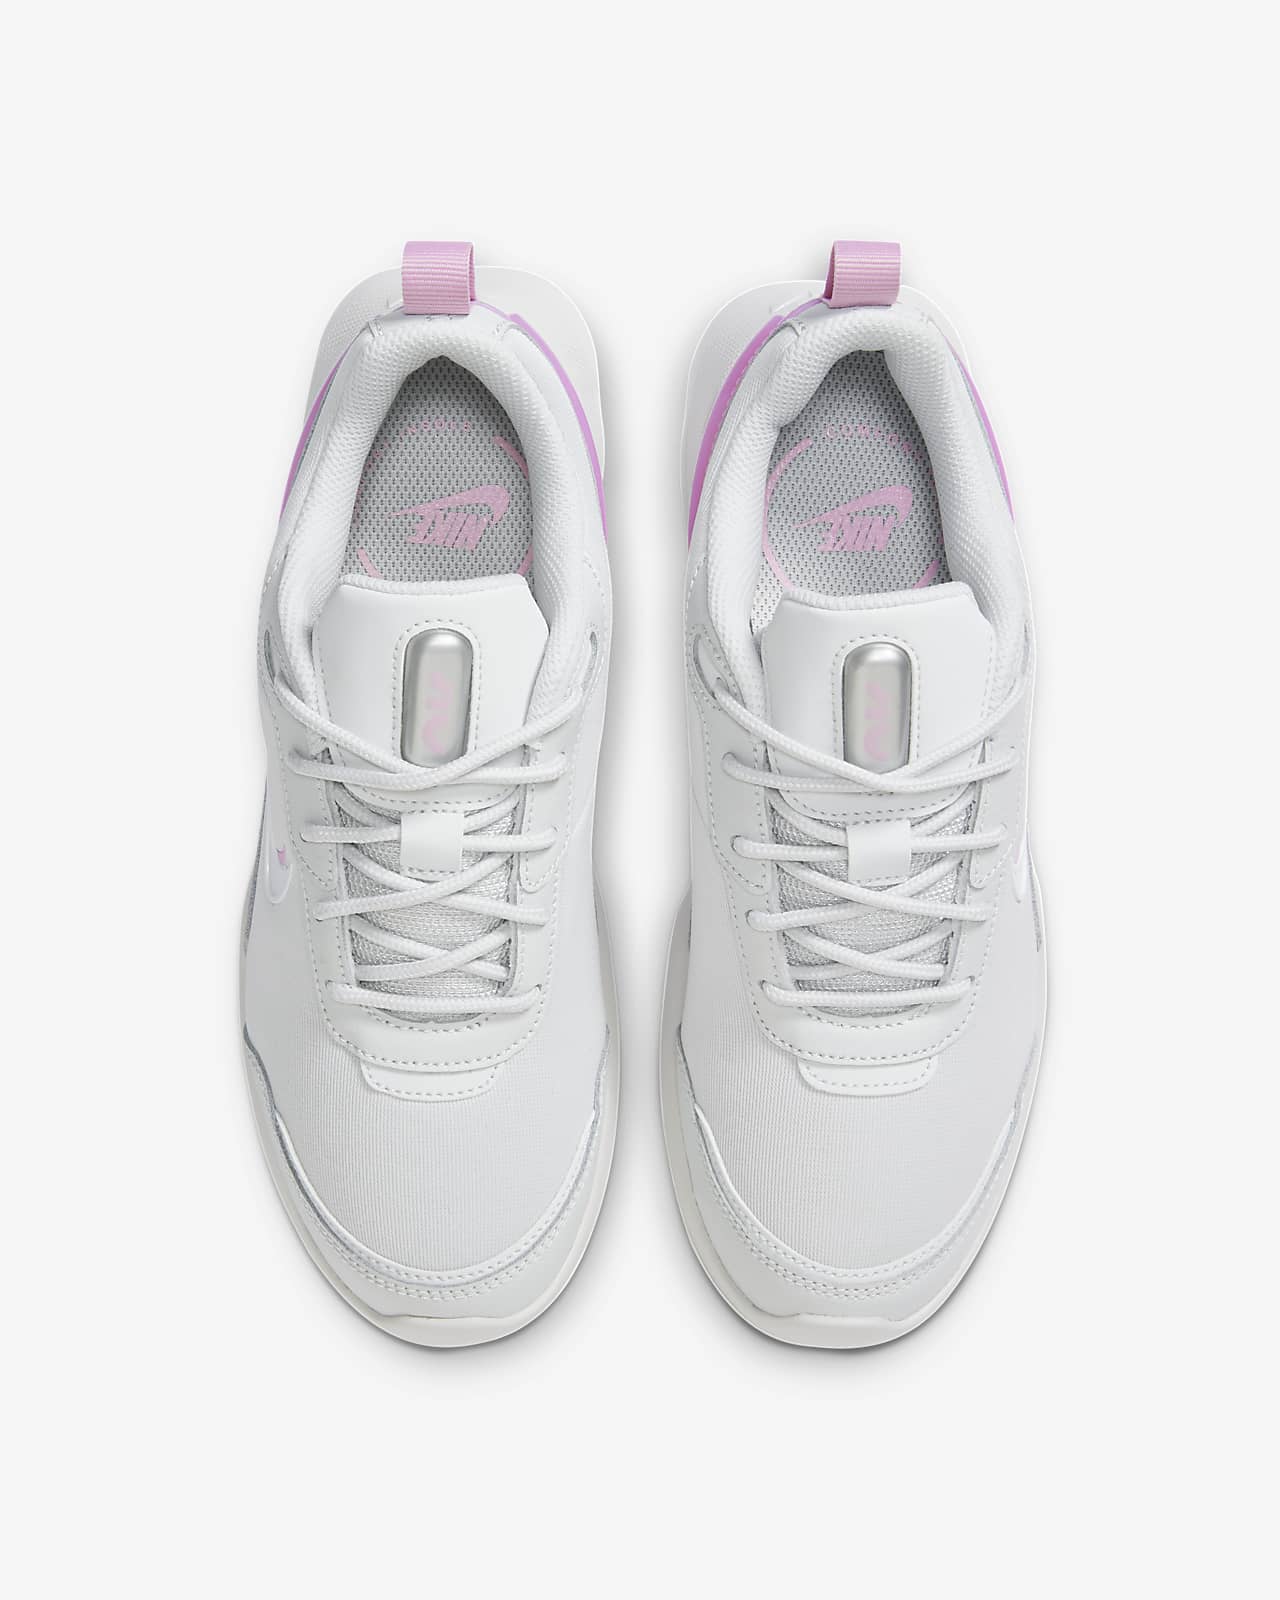 Nike Air Max Siren Women's Shoe. Nike SG